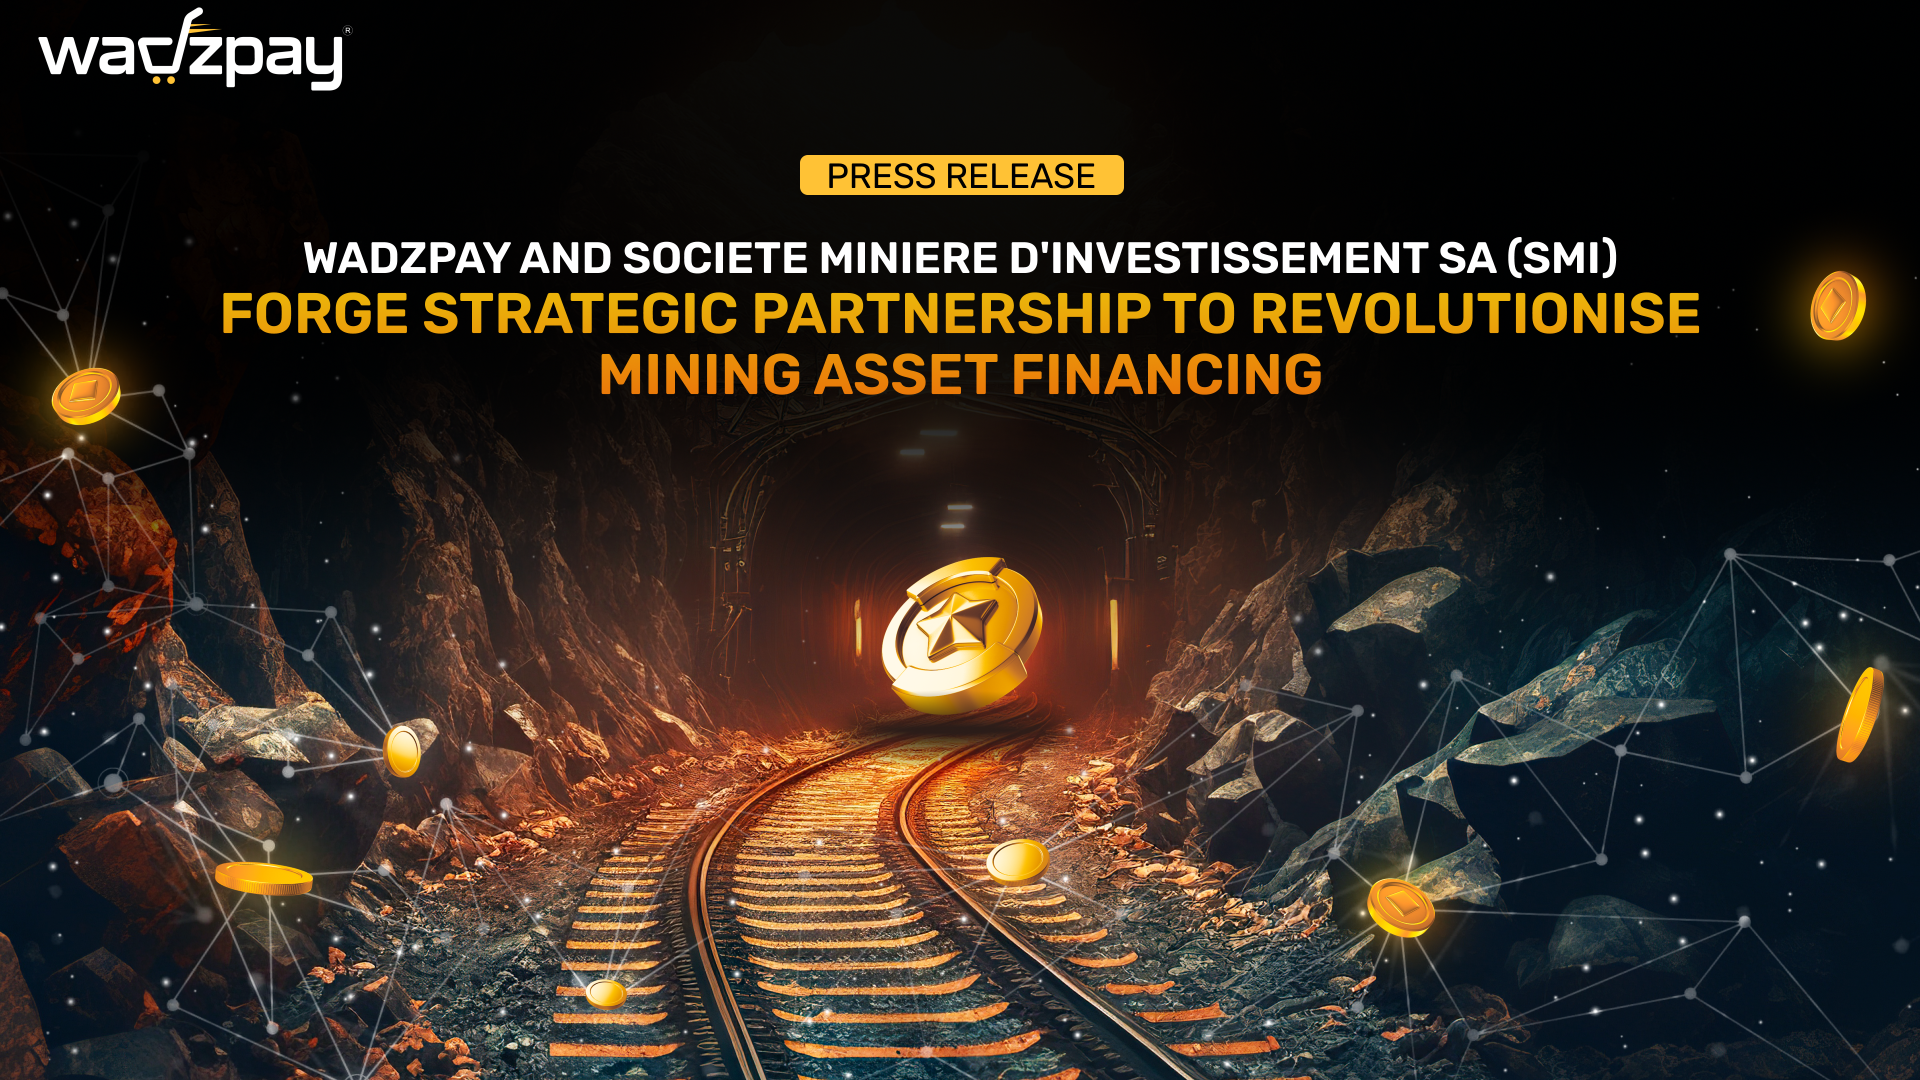 WadzPay and Societe Miniere D'Investissement SA (SMI) Forge Strategic Partnership to Revolutionise Mining Asset Financing